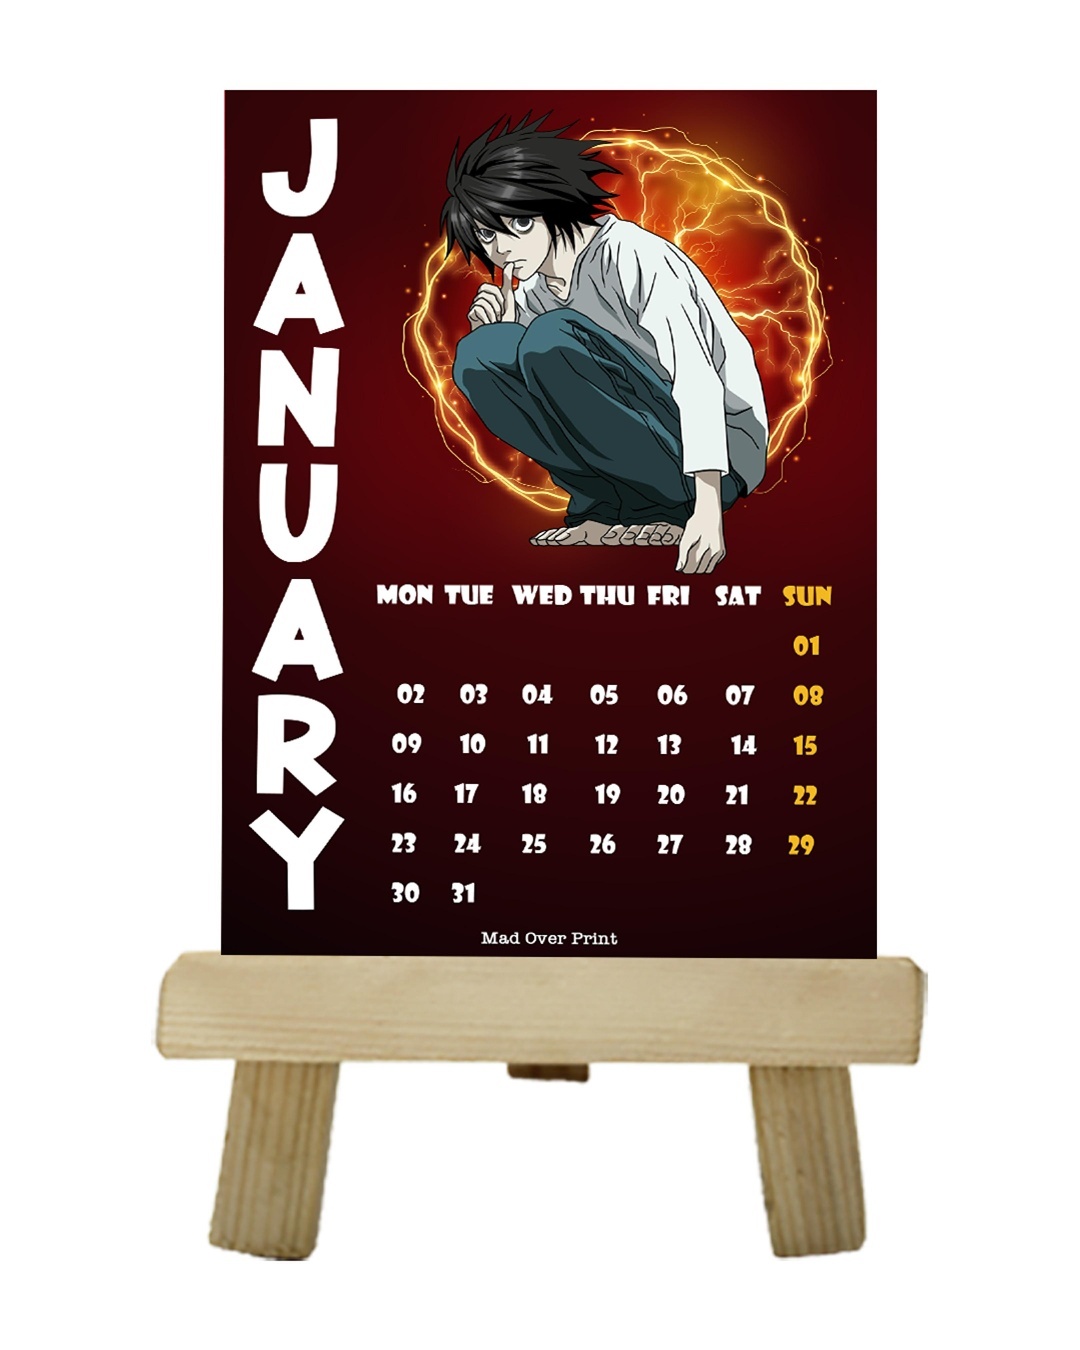 Details more than 88 anime 2023 calendar super hot in.duhocakina